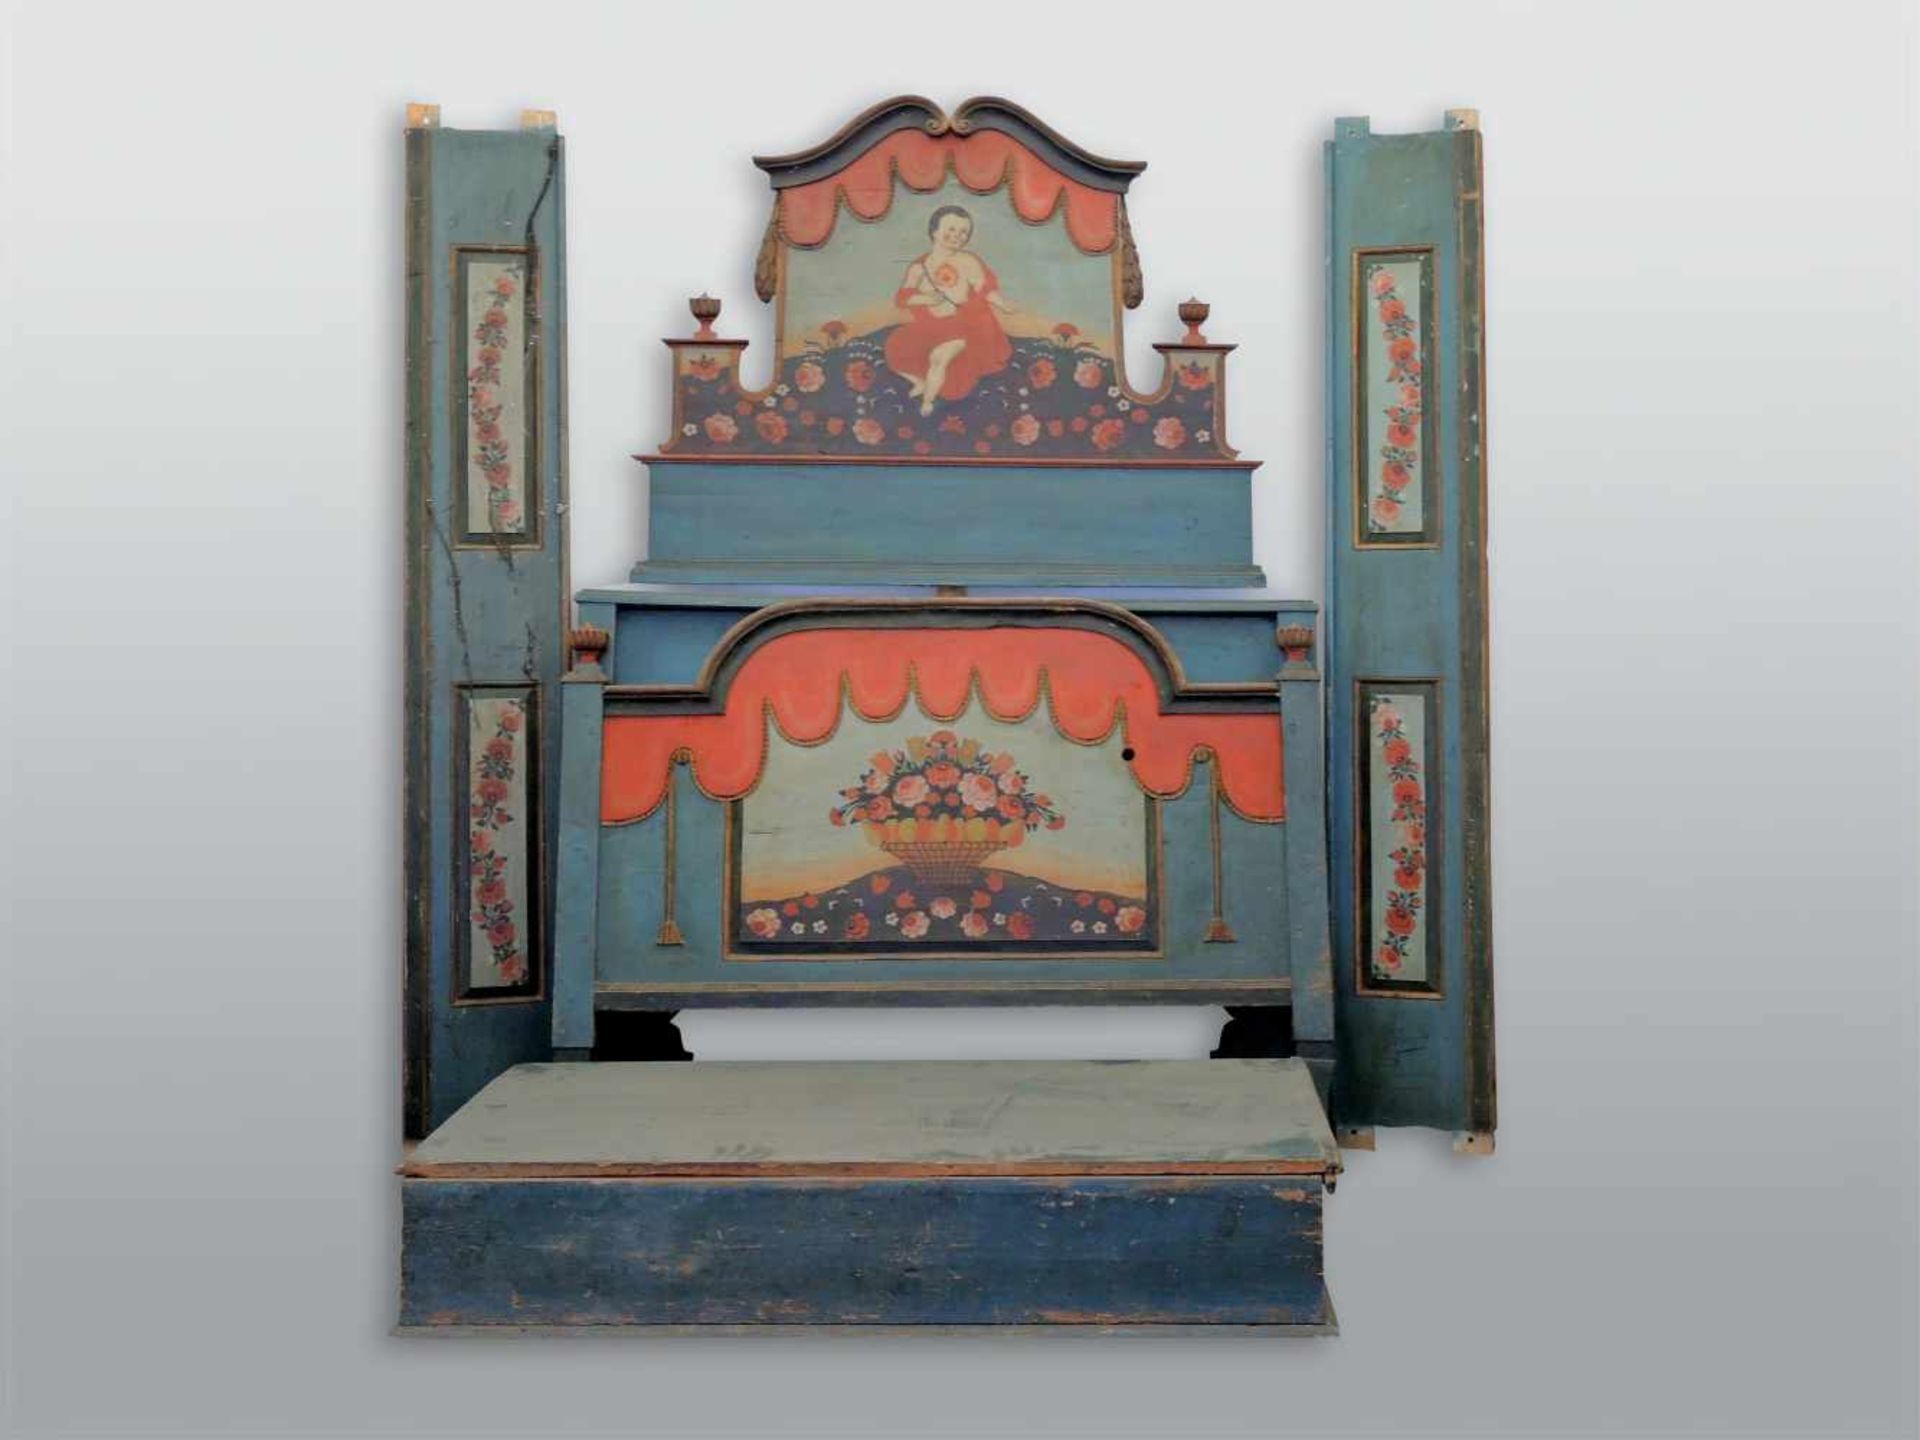 Inntaler Hochzeitsbett Mit innenliegender Truhe, original bemalt. Inntal, um 1820. H x B x T ca. 170